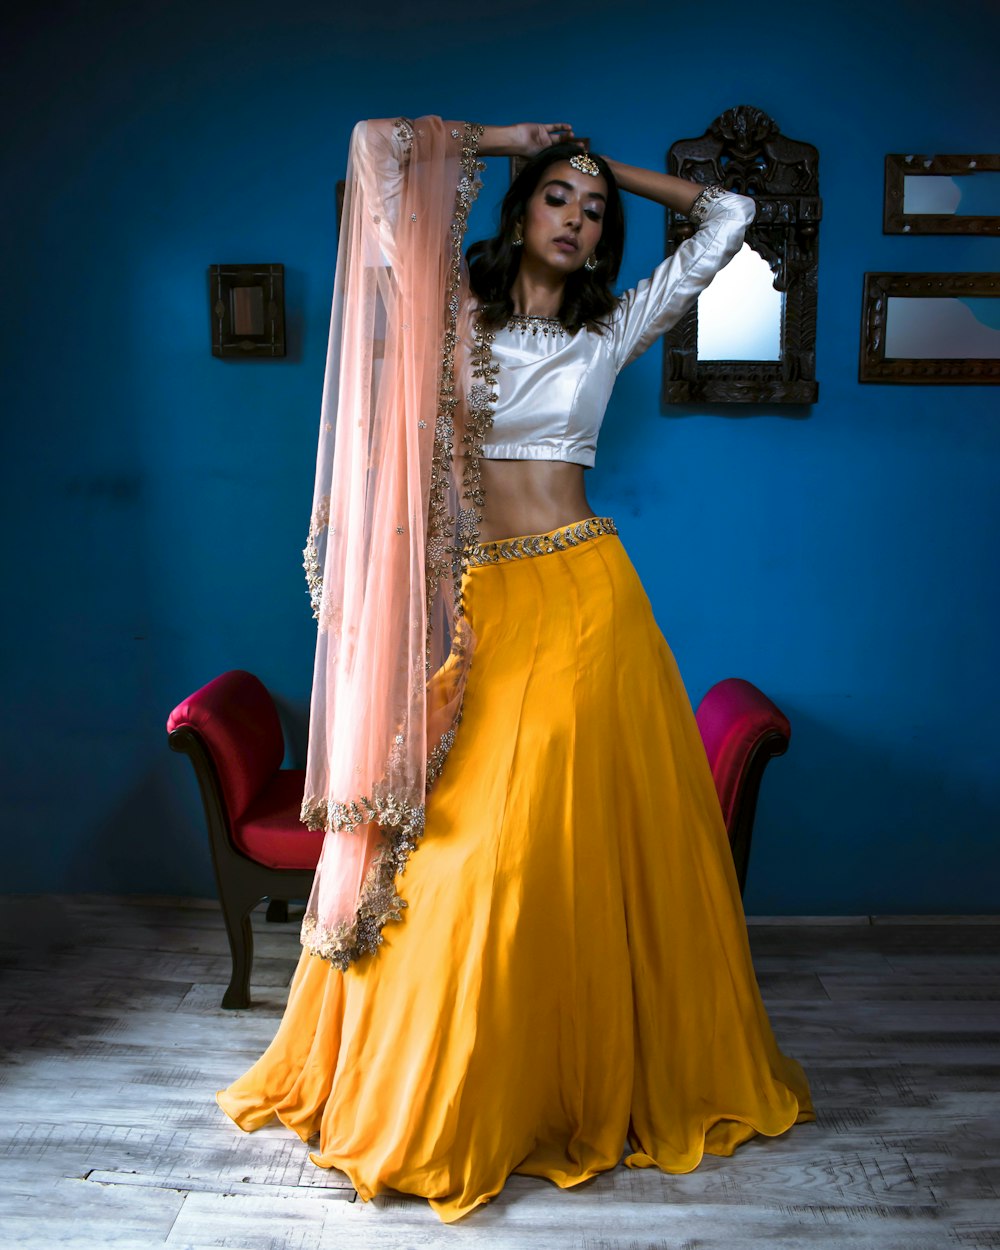 Woman wearing white crop top yellow long skirt photo – Free Delhi Image on Unsplash